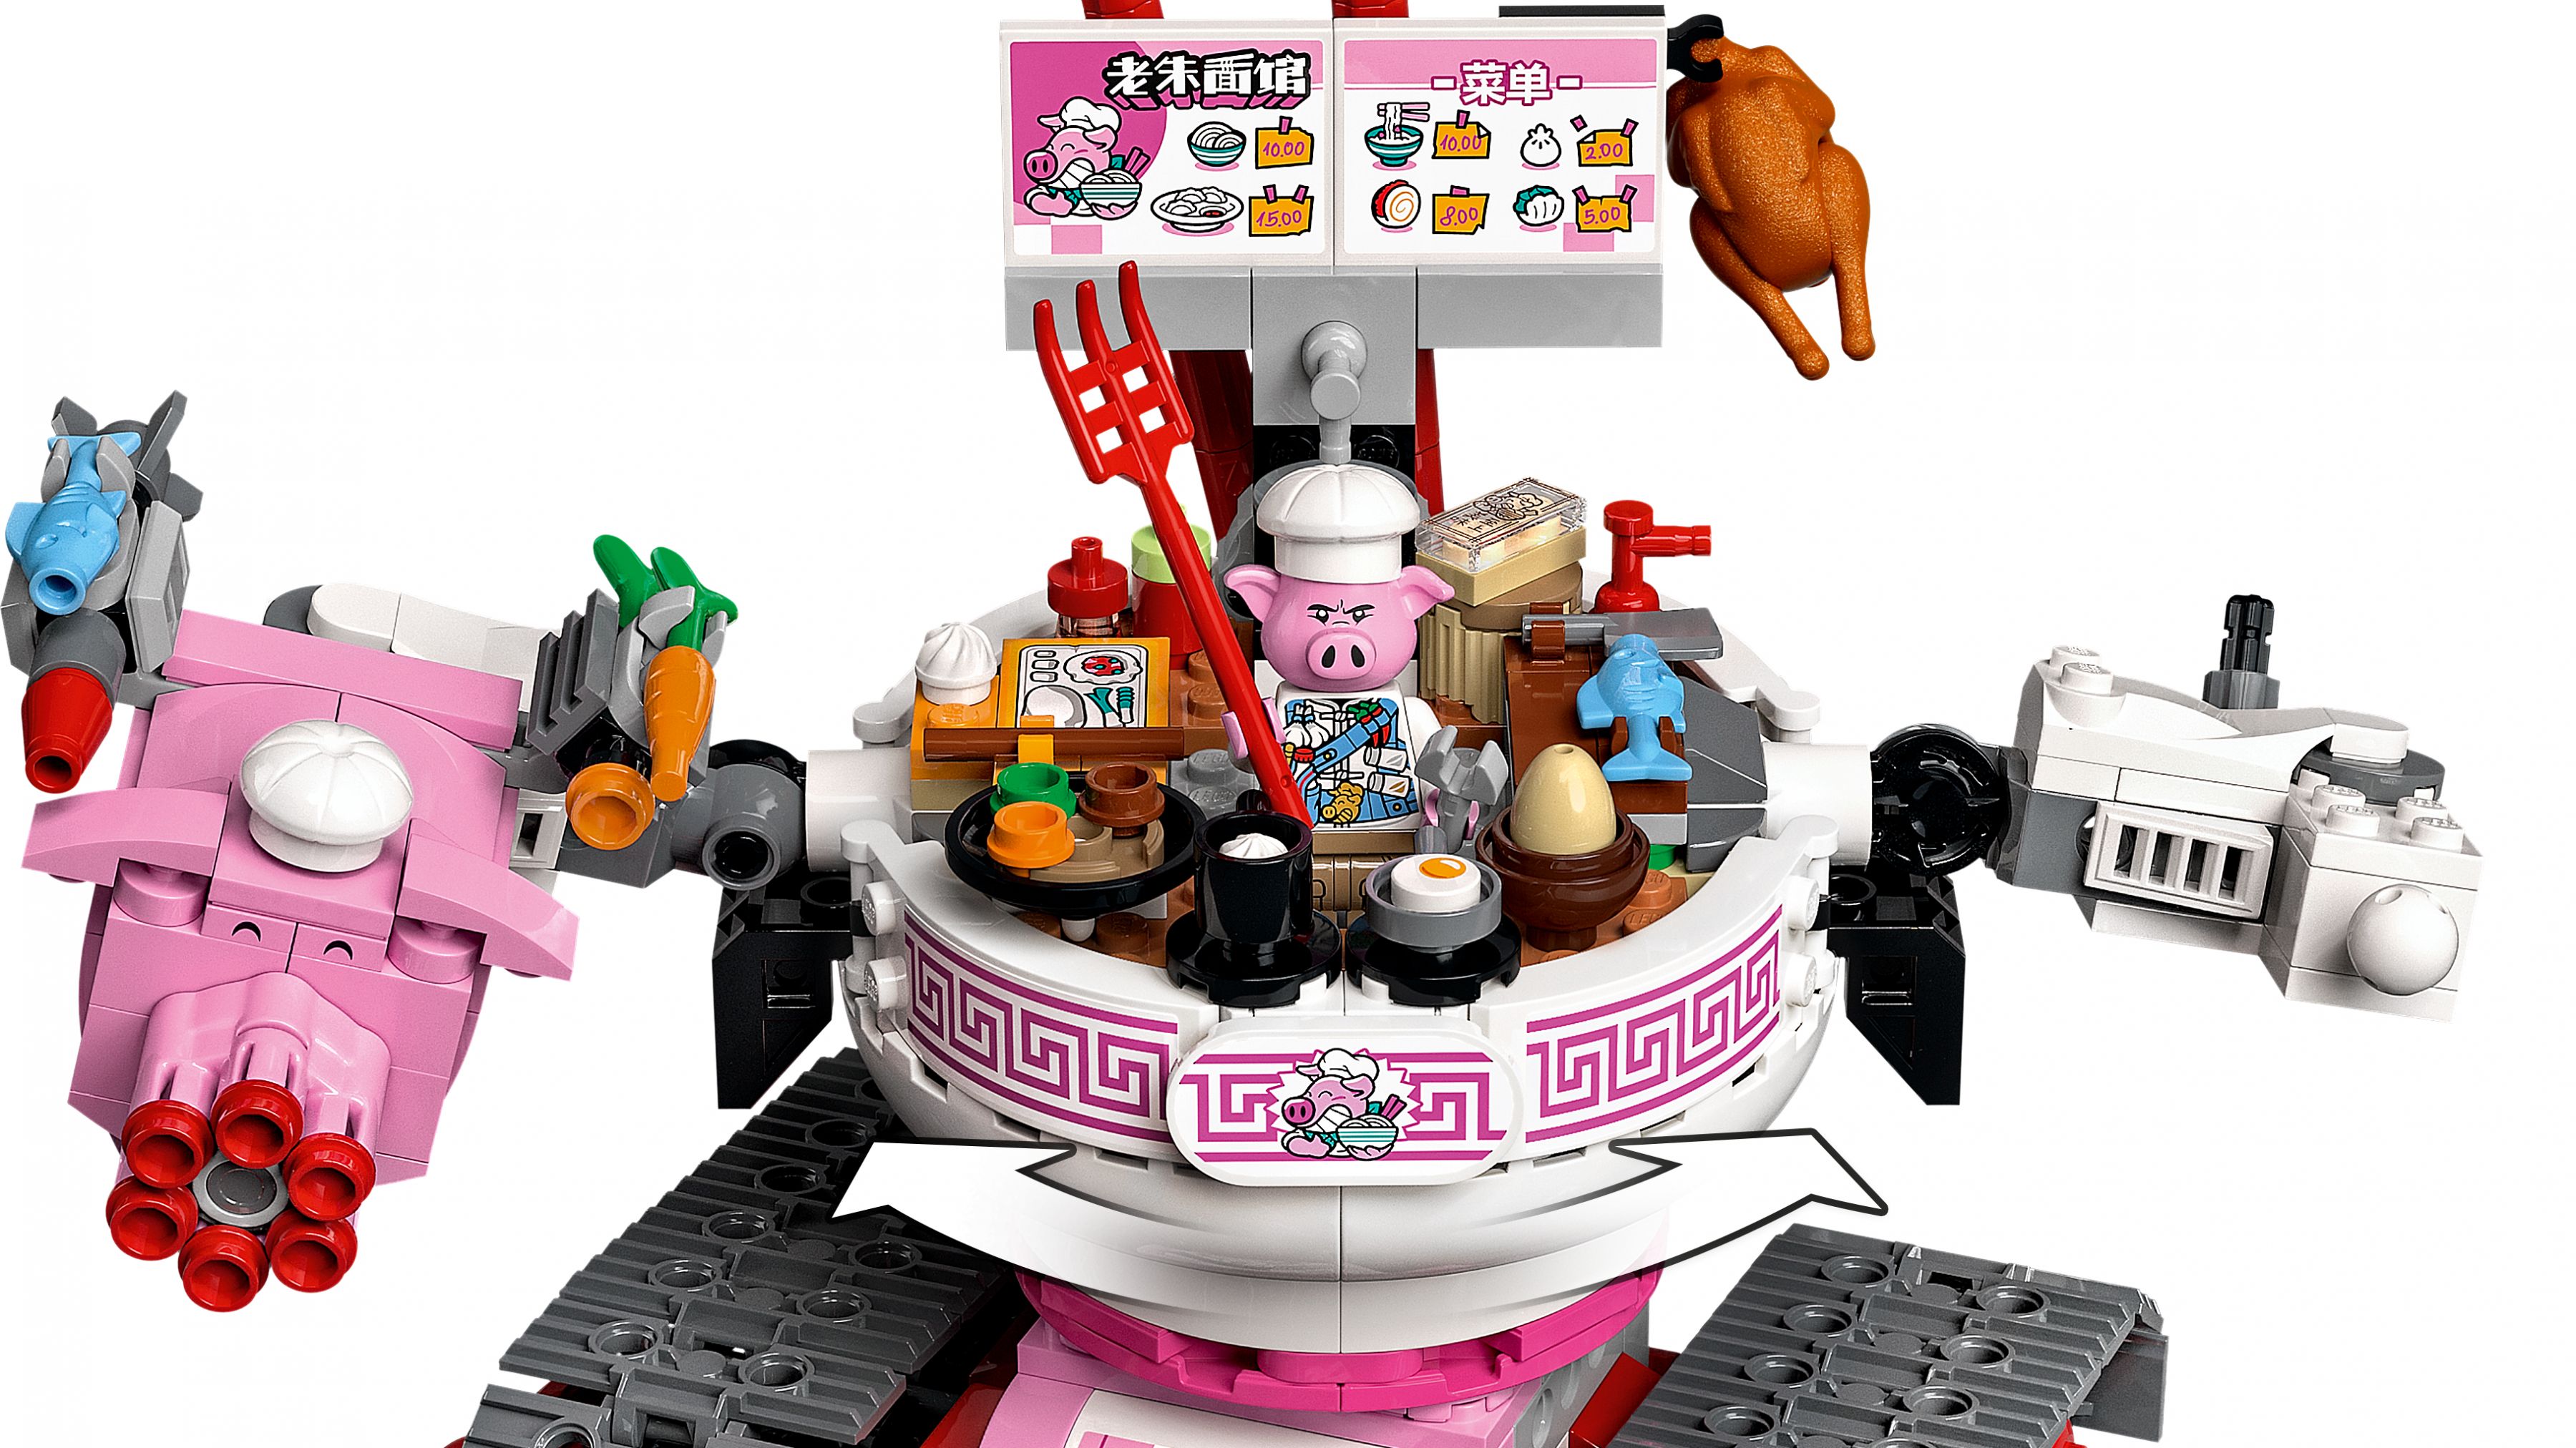 LEGO Monkie Kid 80026 Pigsys Nudelwagen LEGO_80026_alt5.jpg